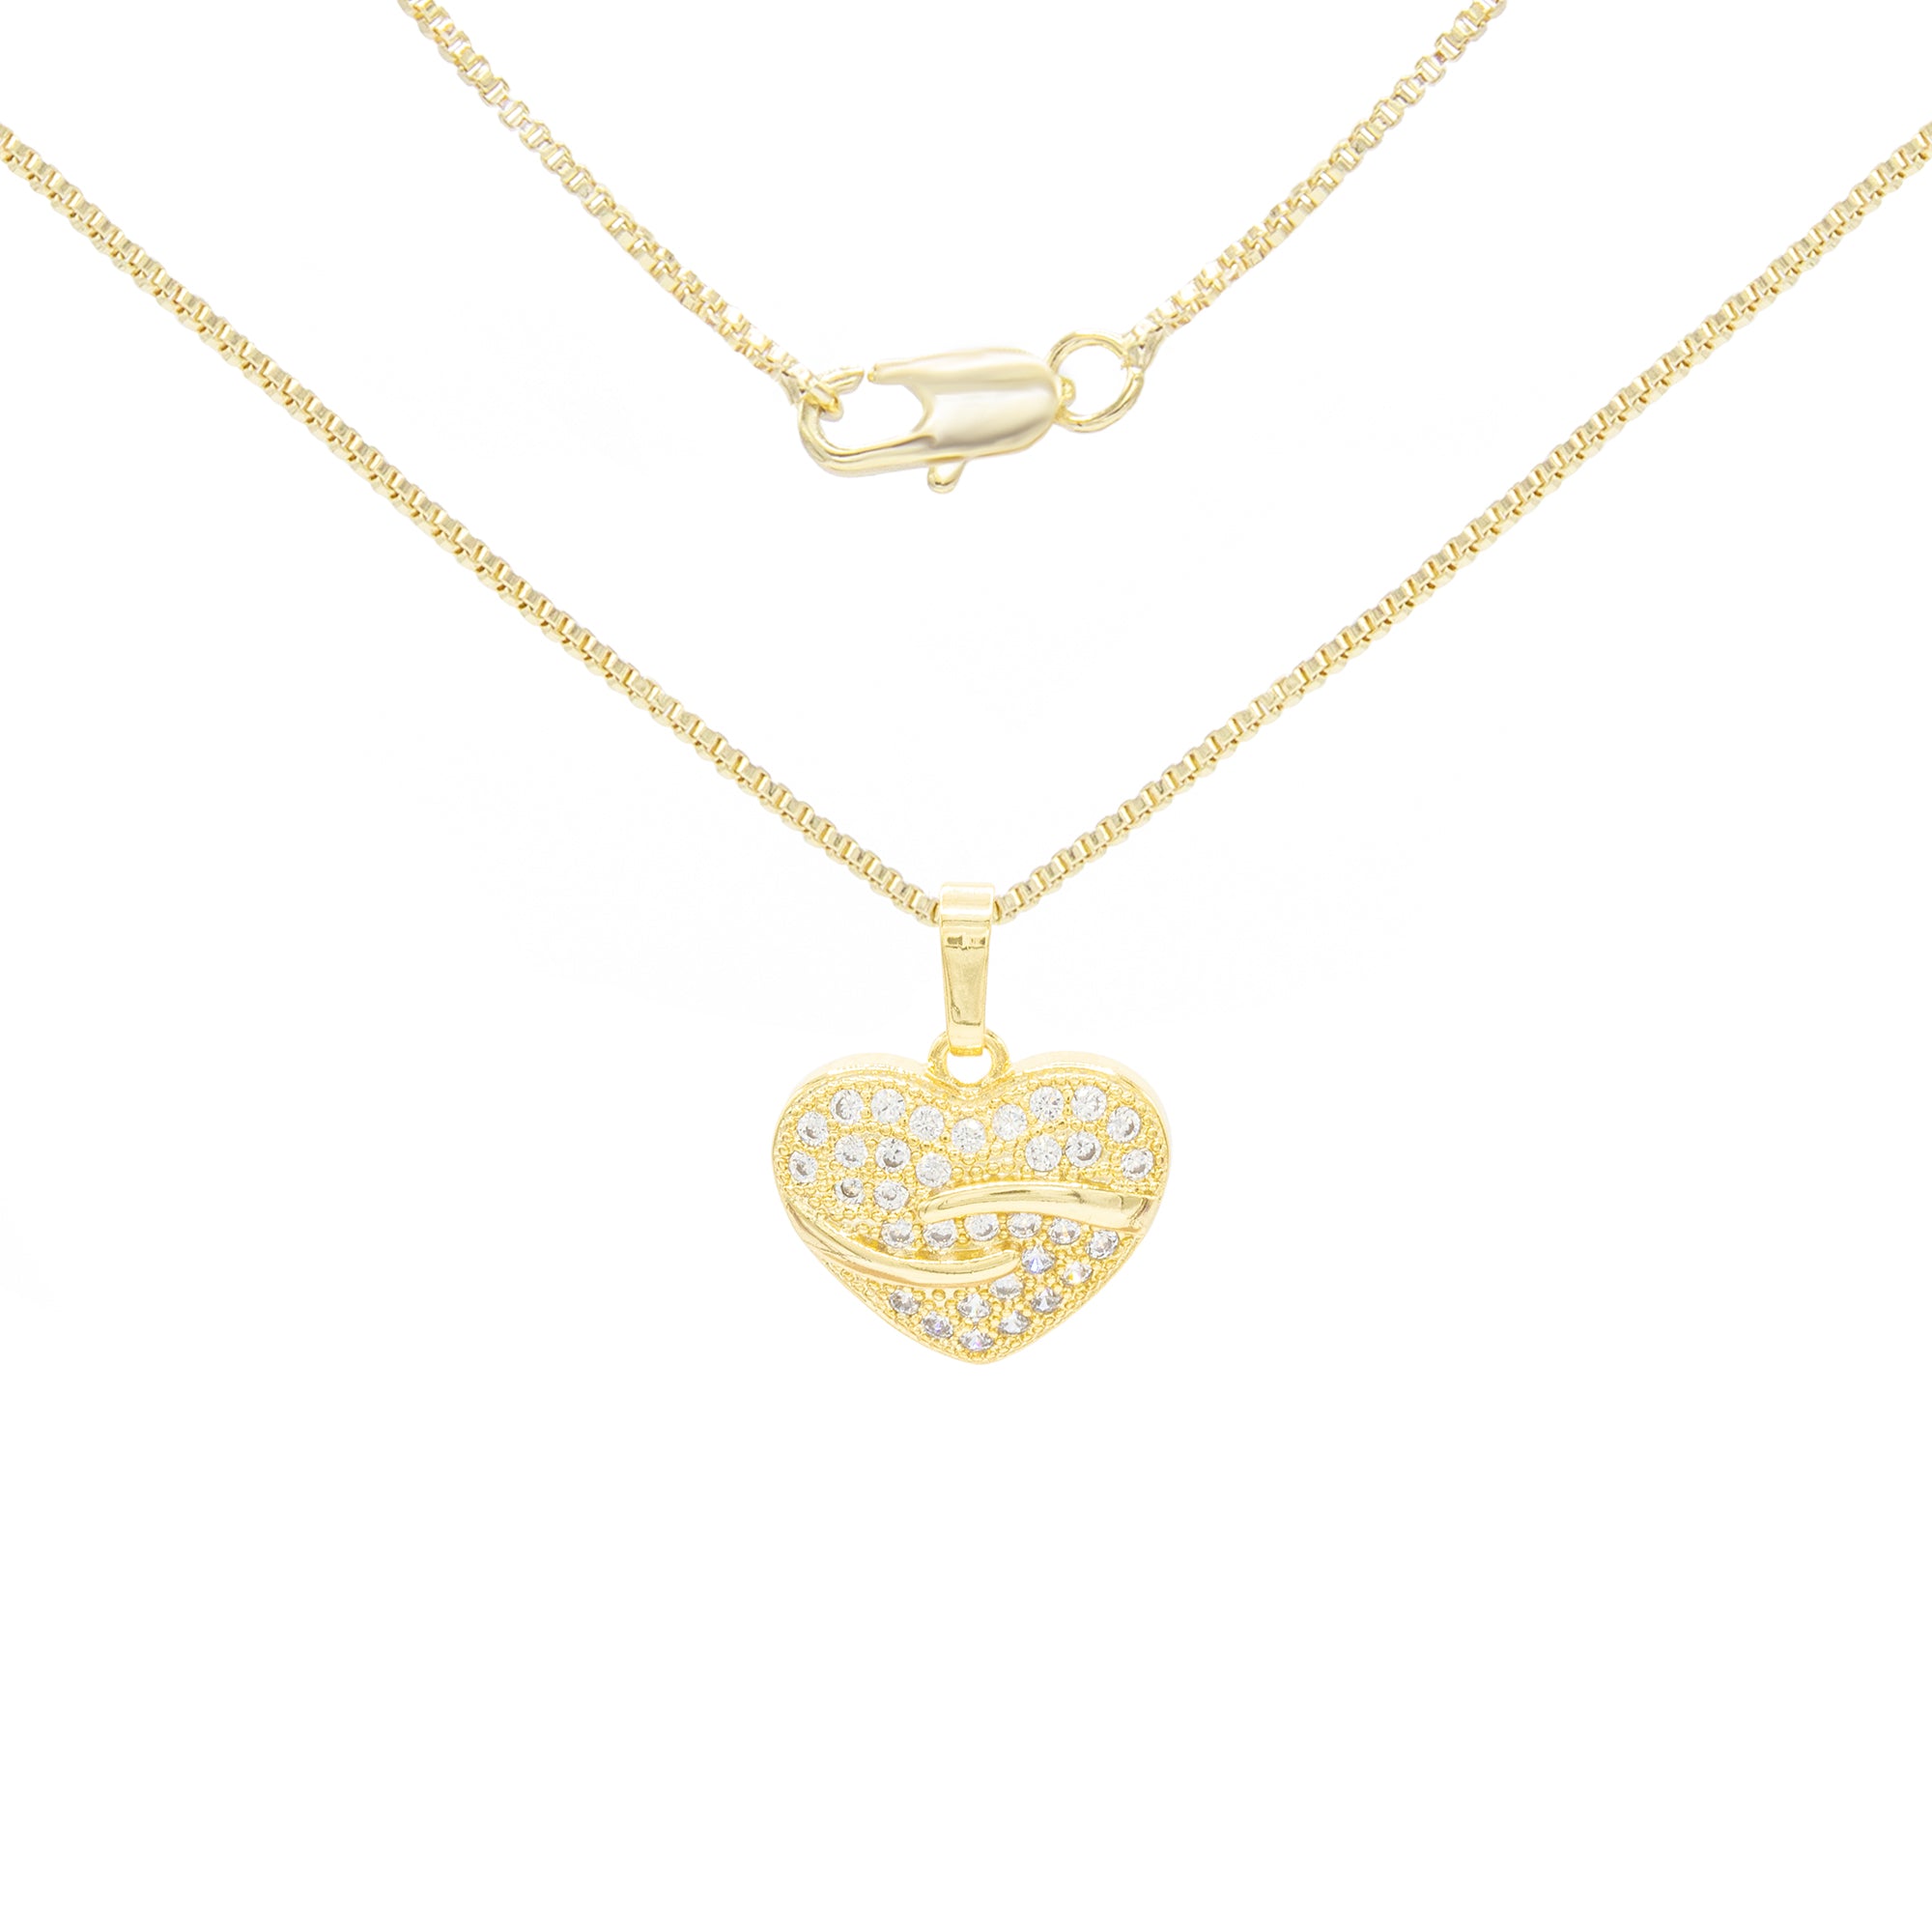 Cubic Zirconia 14K Gold Filled Heart Pendant Necklace Set